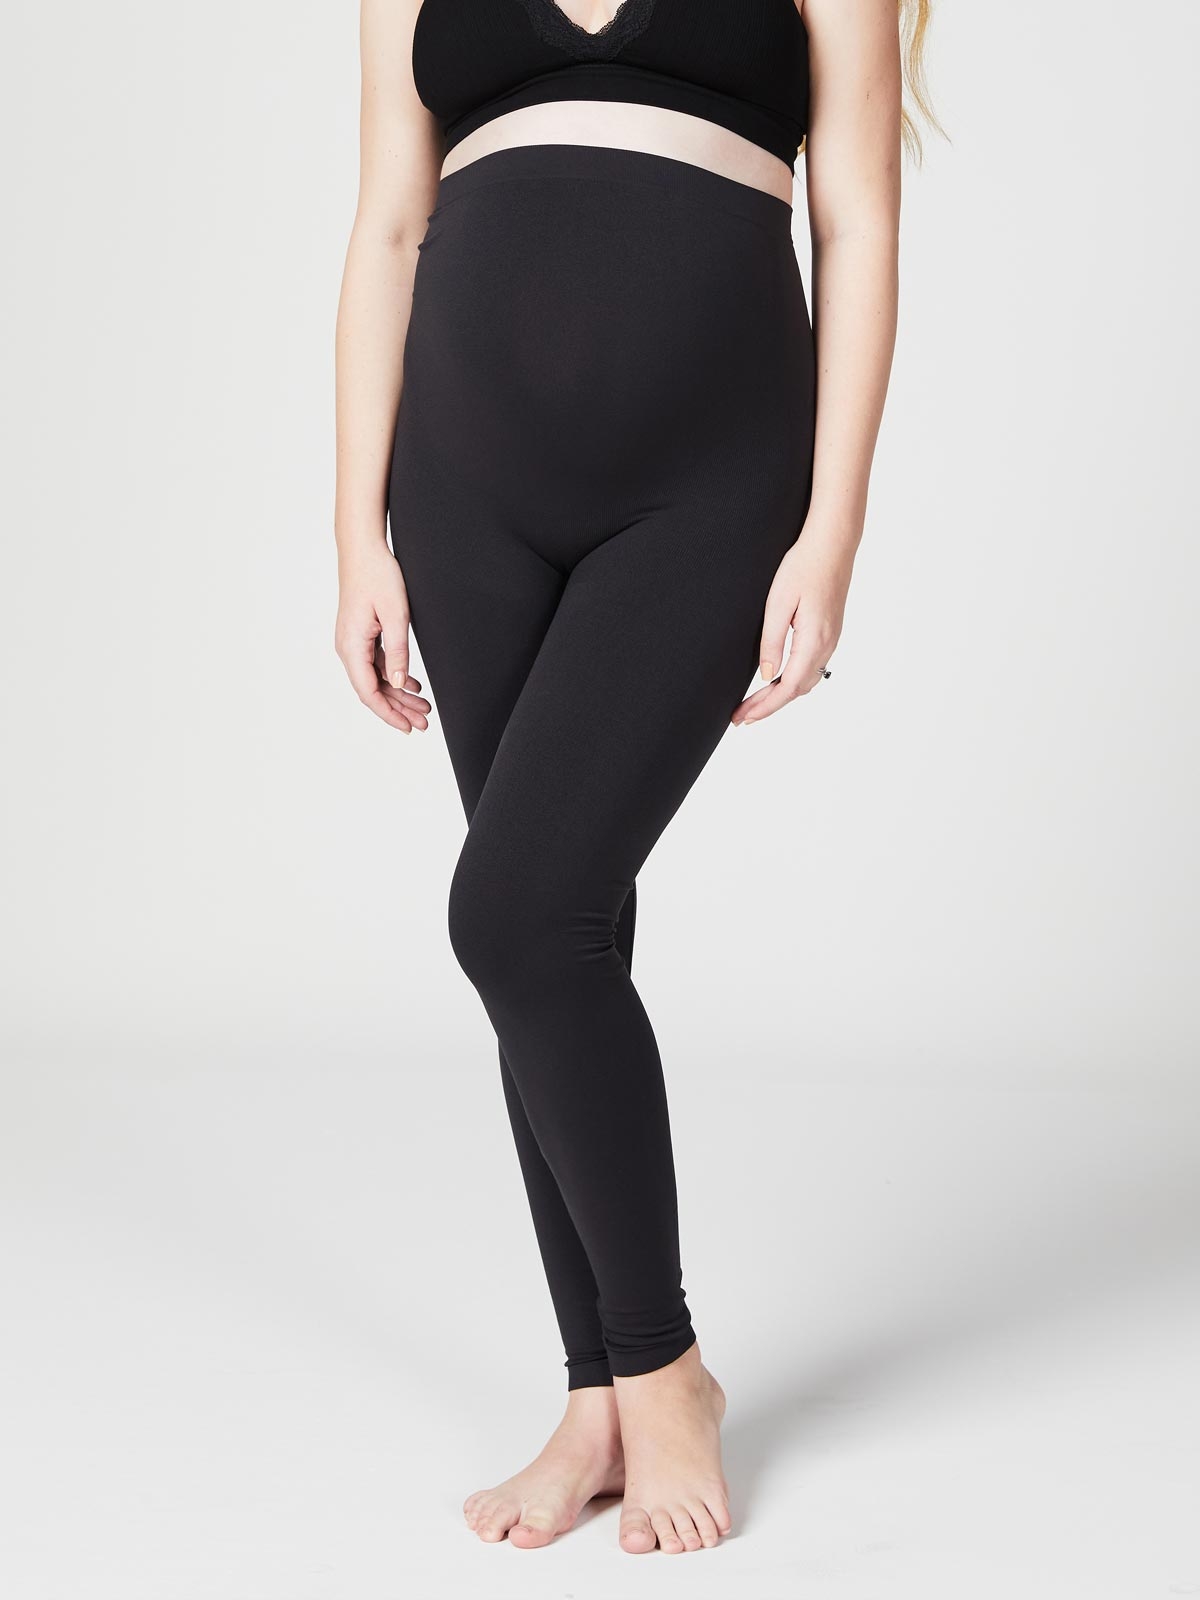  Womens Maternity Leggings Ultra-Soft Pregnancy Yoga Pants  Over The Bump Thermal Bottom Underwear Workout Leggings Navy M